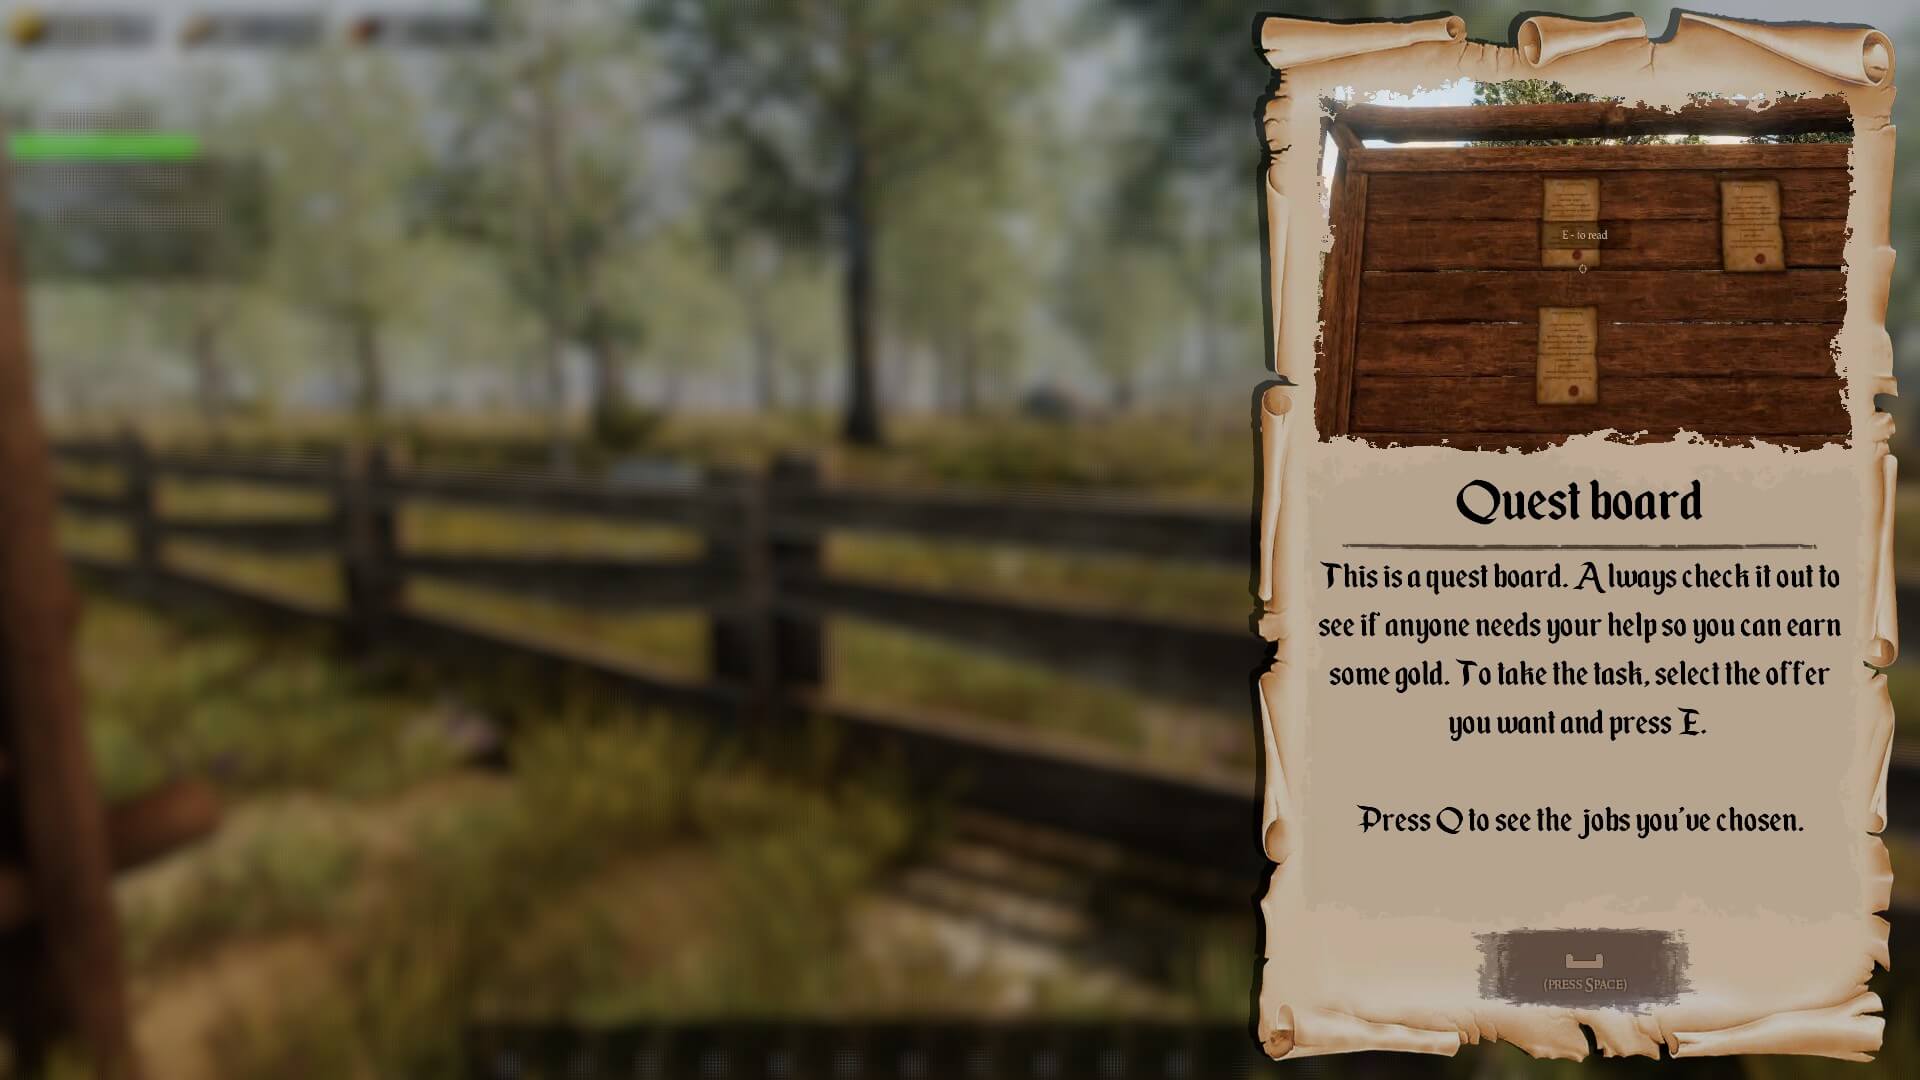 A screenshot from Castle Flipper showing the quest board